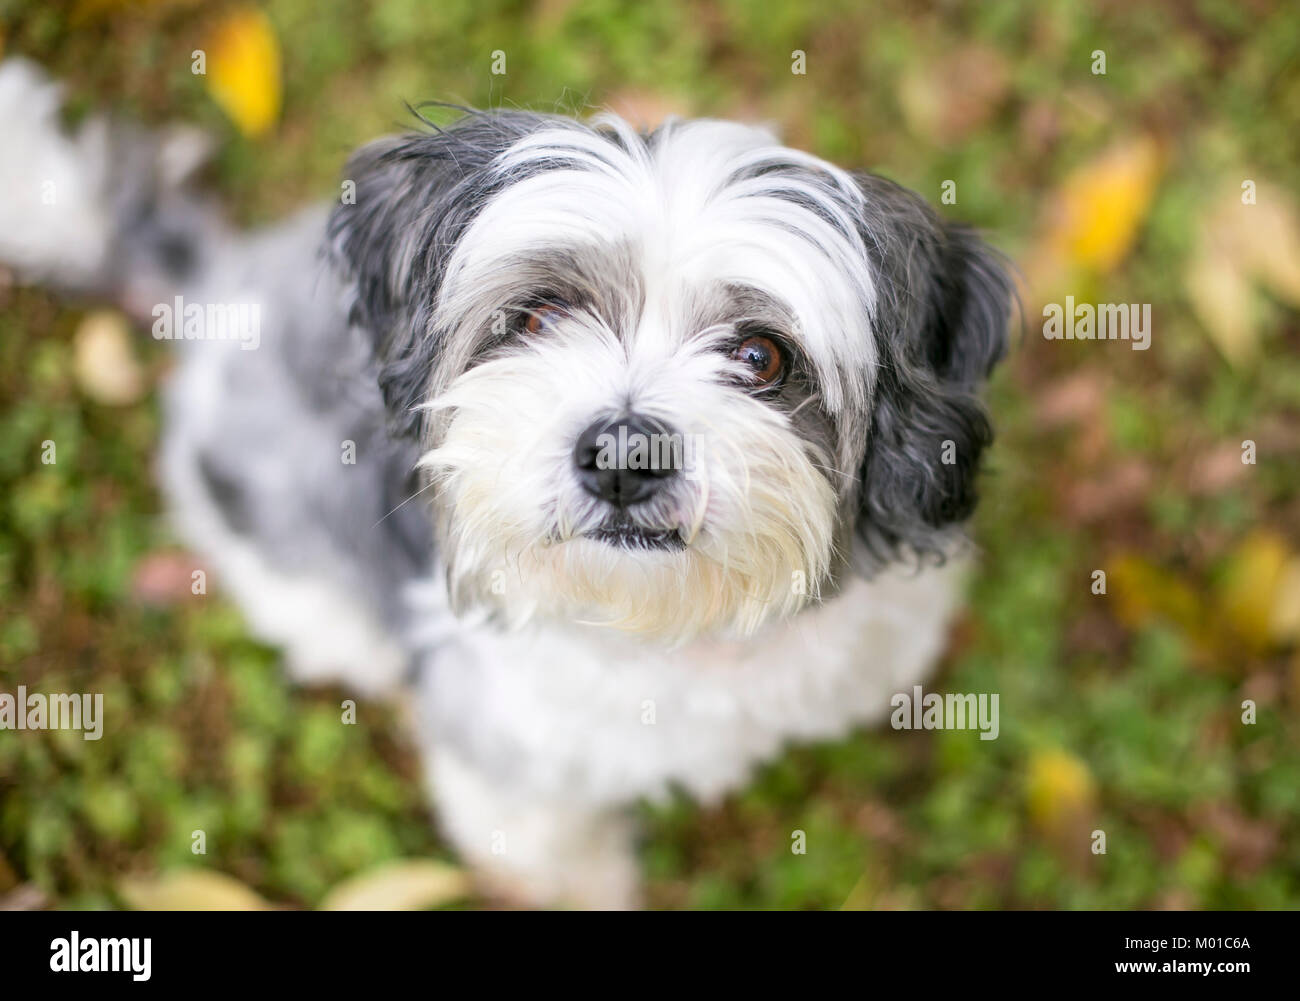 Portrait of a cute Shih Tzu mix dog in the grass Stock Photo - Alamy